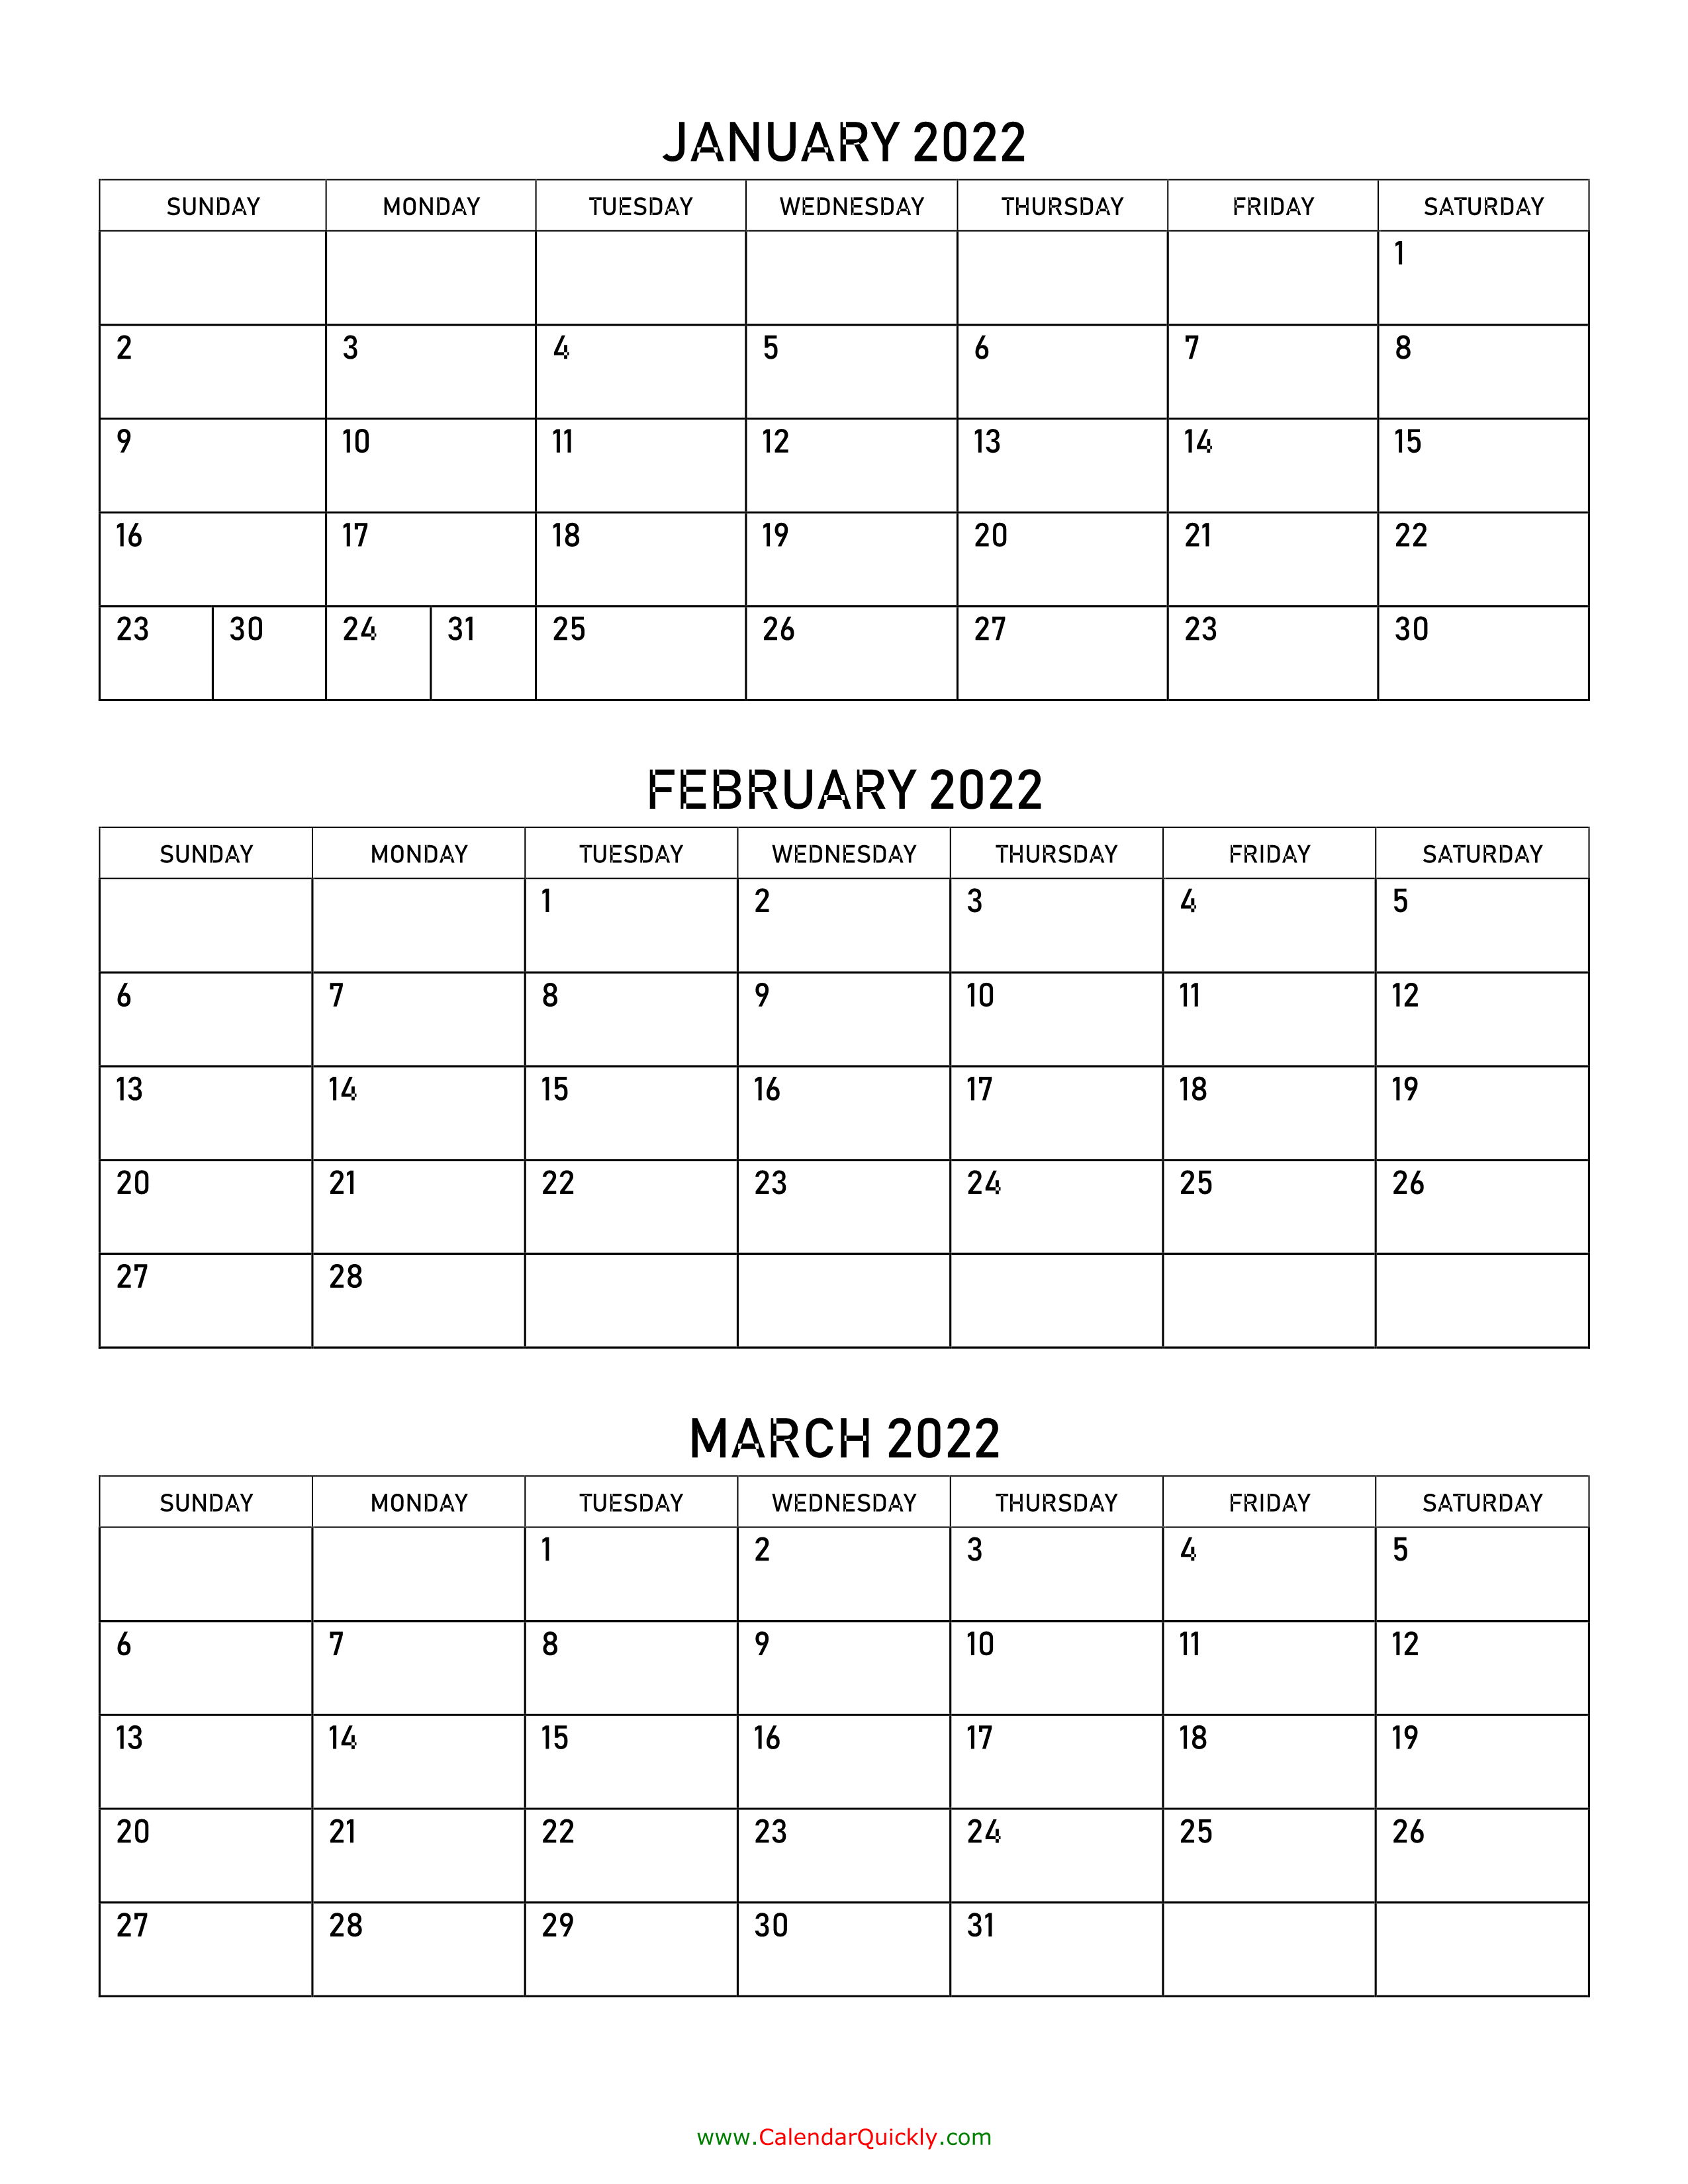 January to March 2022 Calendar Calendar Quickly